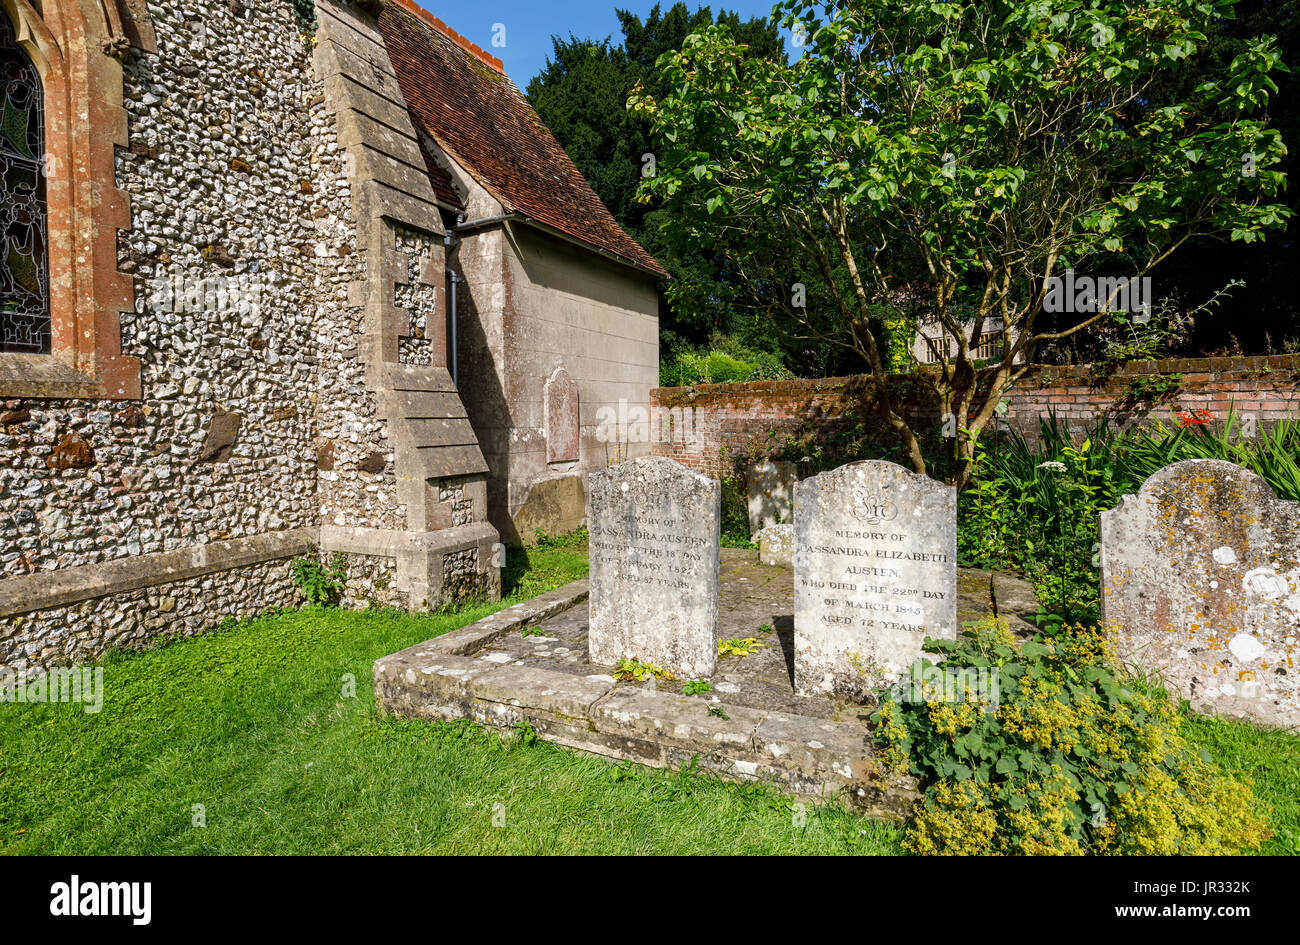 Gravestones of Jane Austen's mother and sister Cassandra in churchyard of the parish church of St Nicholas, Chawton, Hampshire, southern England, UK Stock Photo